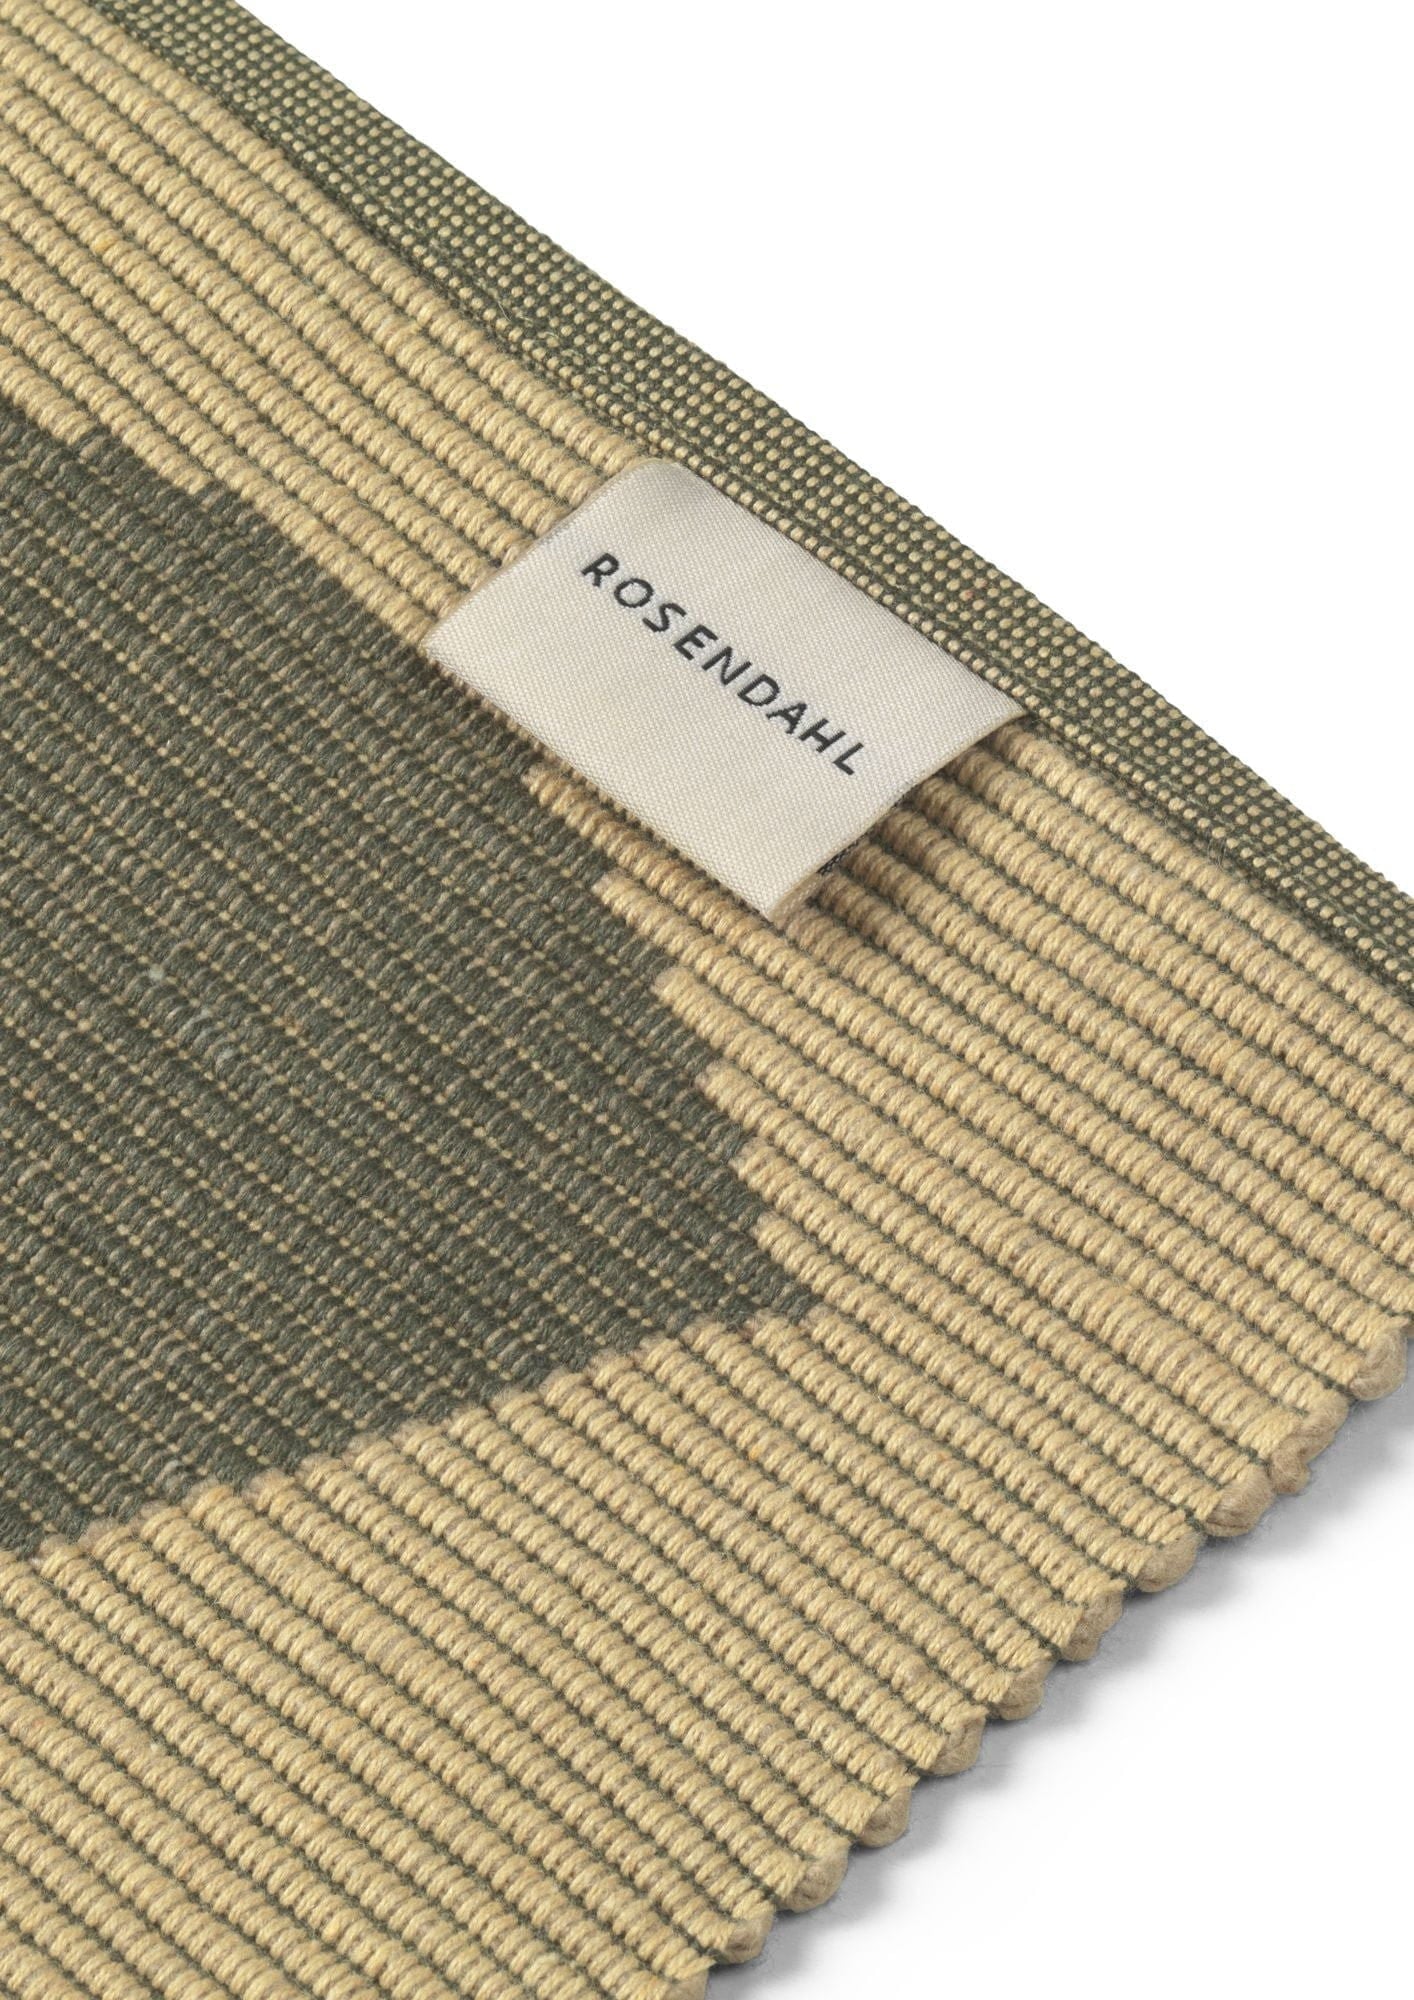 Rosendahl Rosendahl Textilien im Freien Natura 43x30 cm, grün